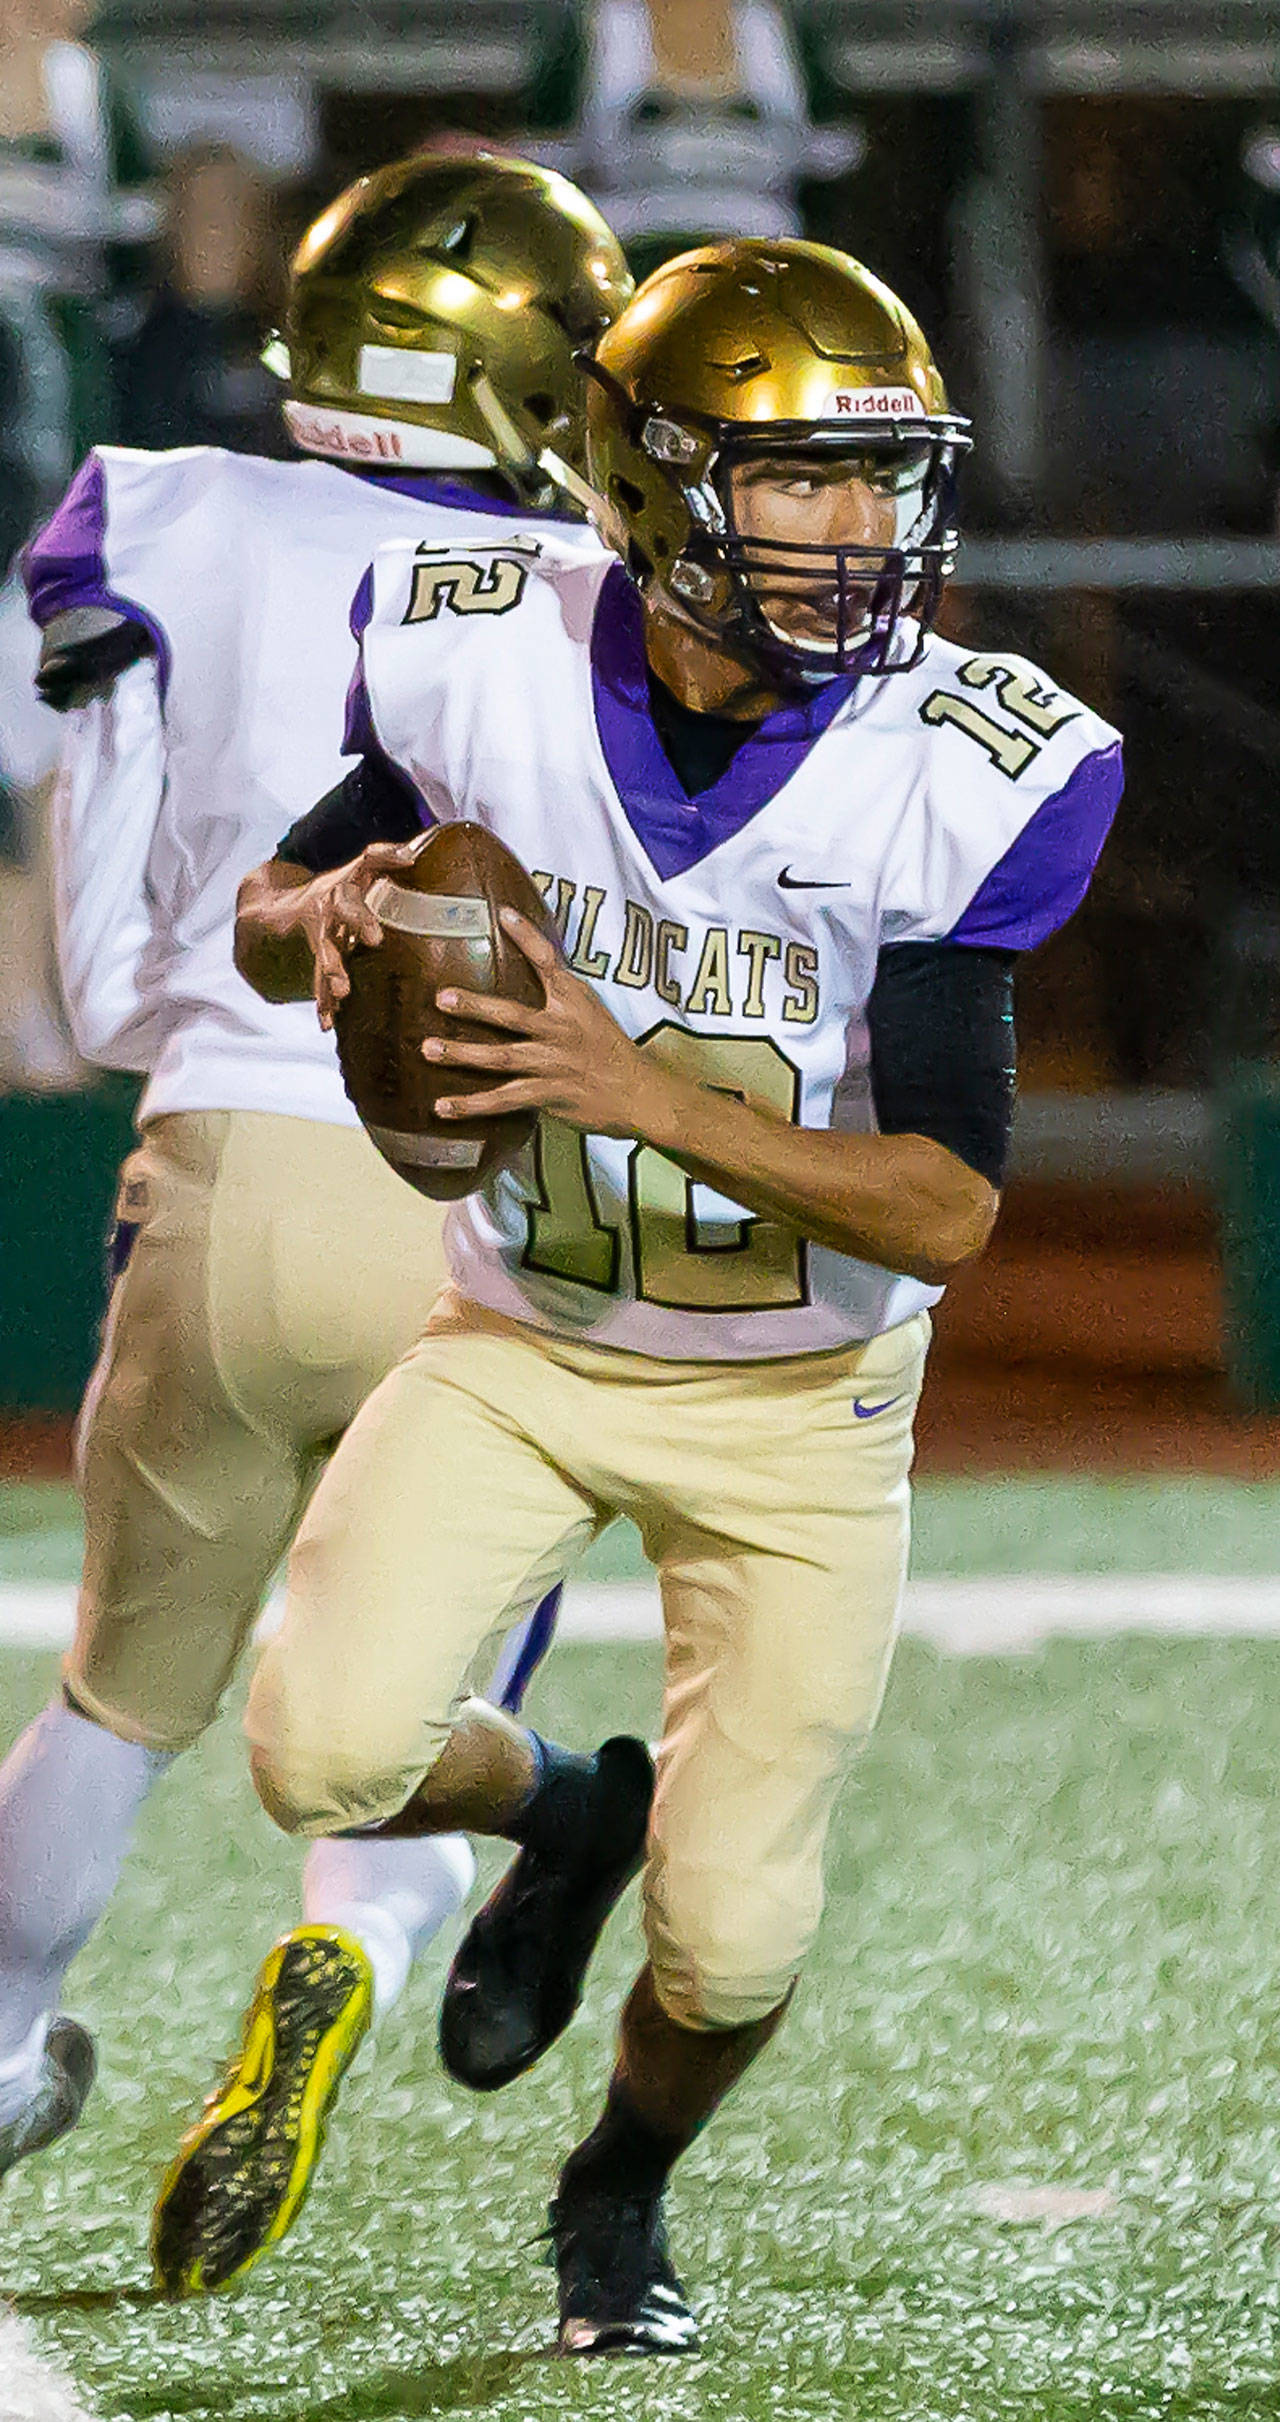 Caleb Fitzgerald started at quarterback for Oak Harbor High School last fall. (Photo by John Fisken)